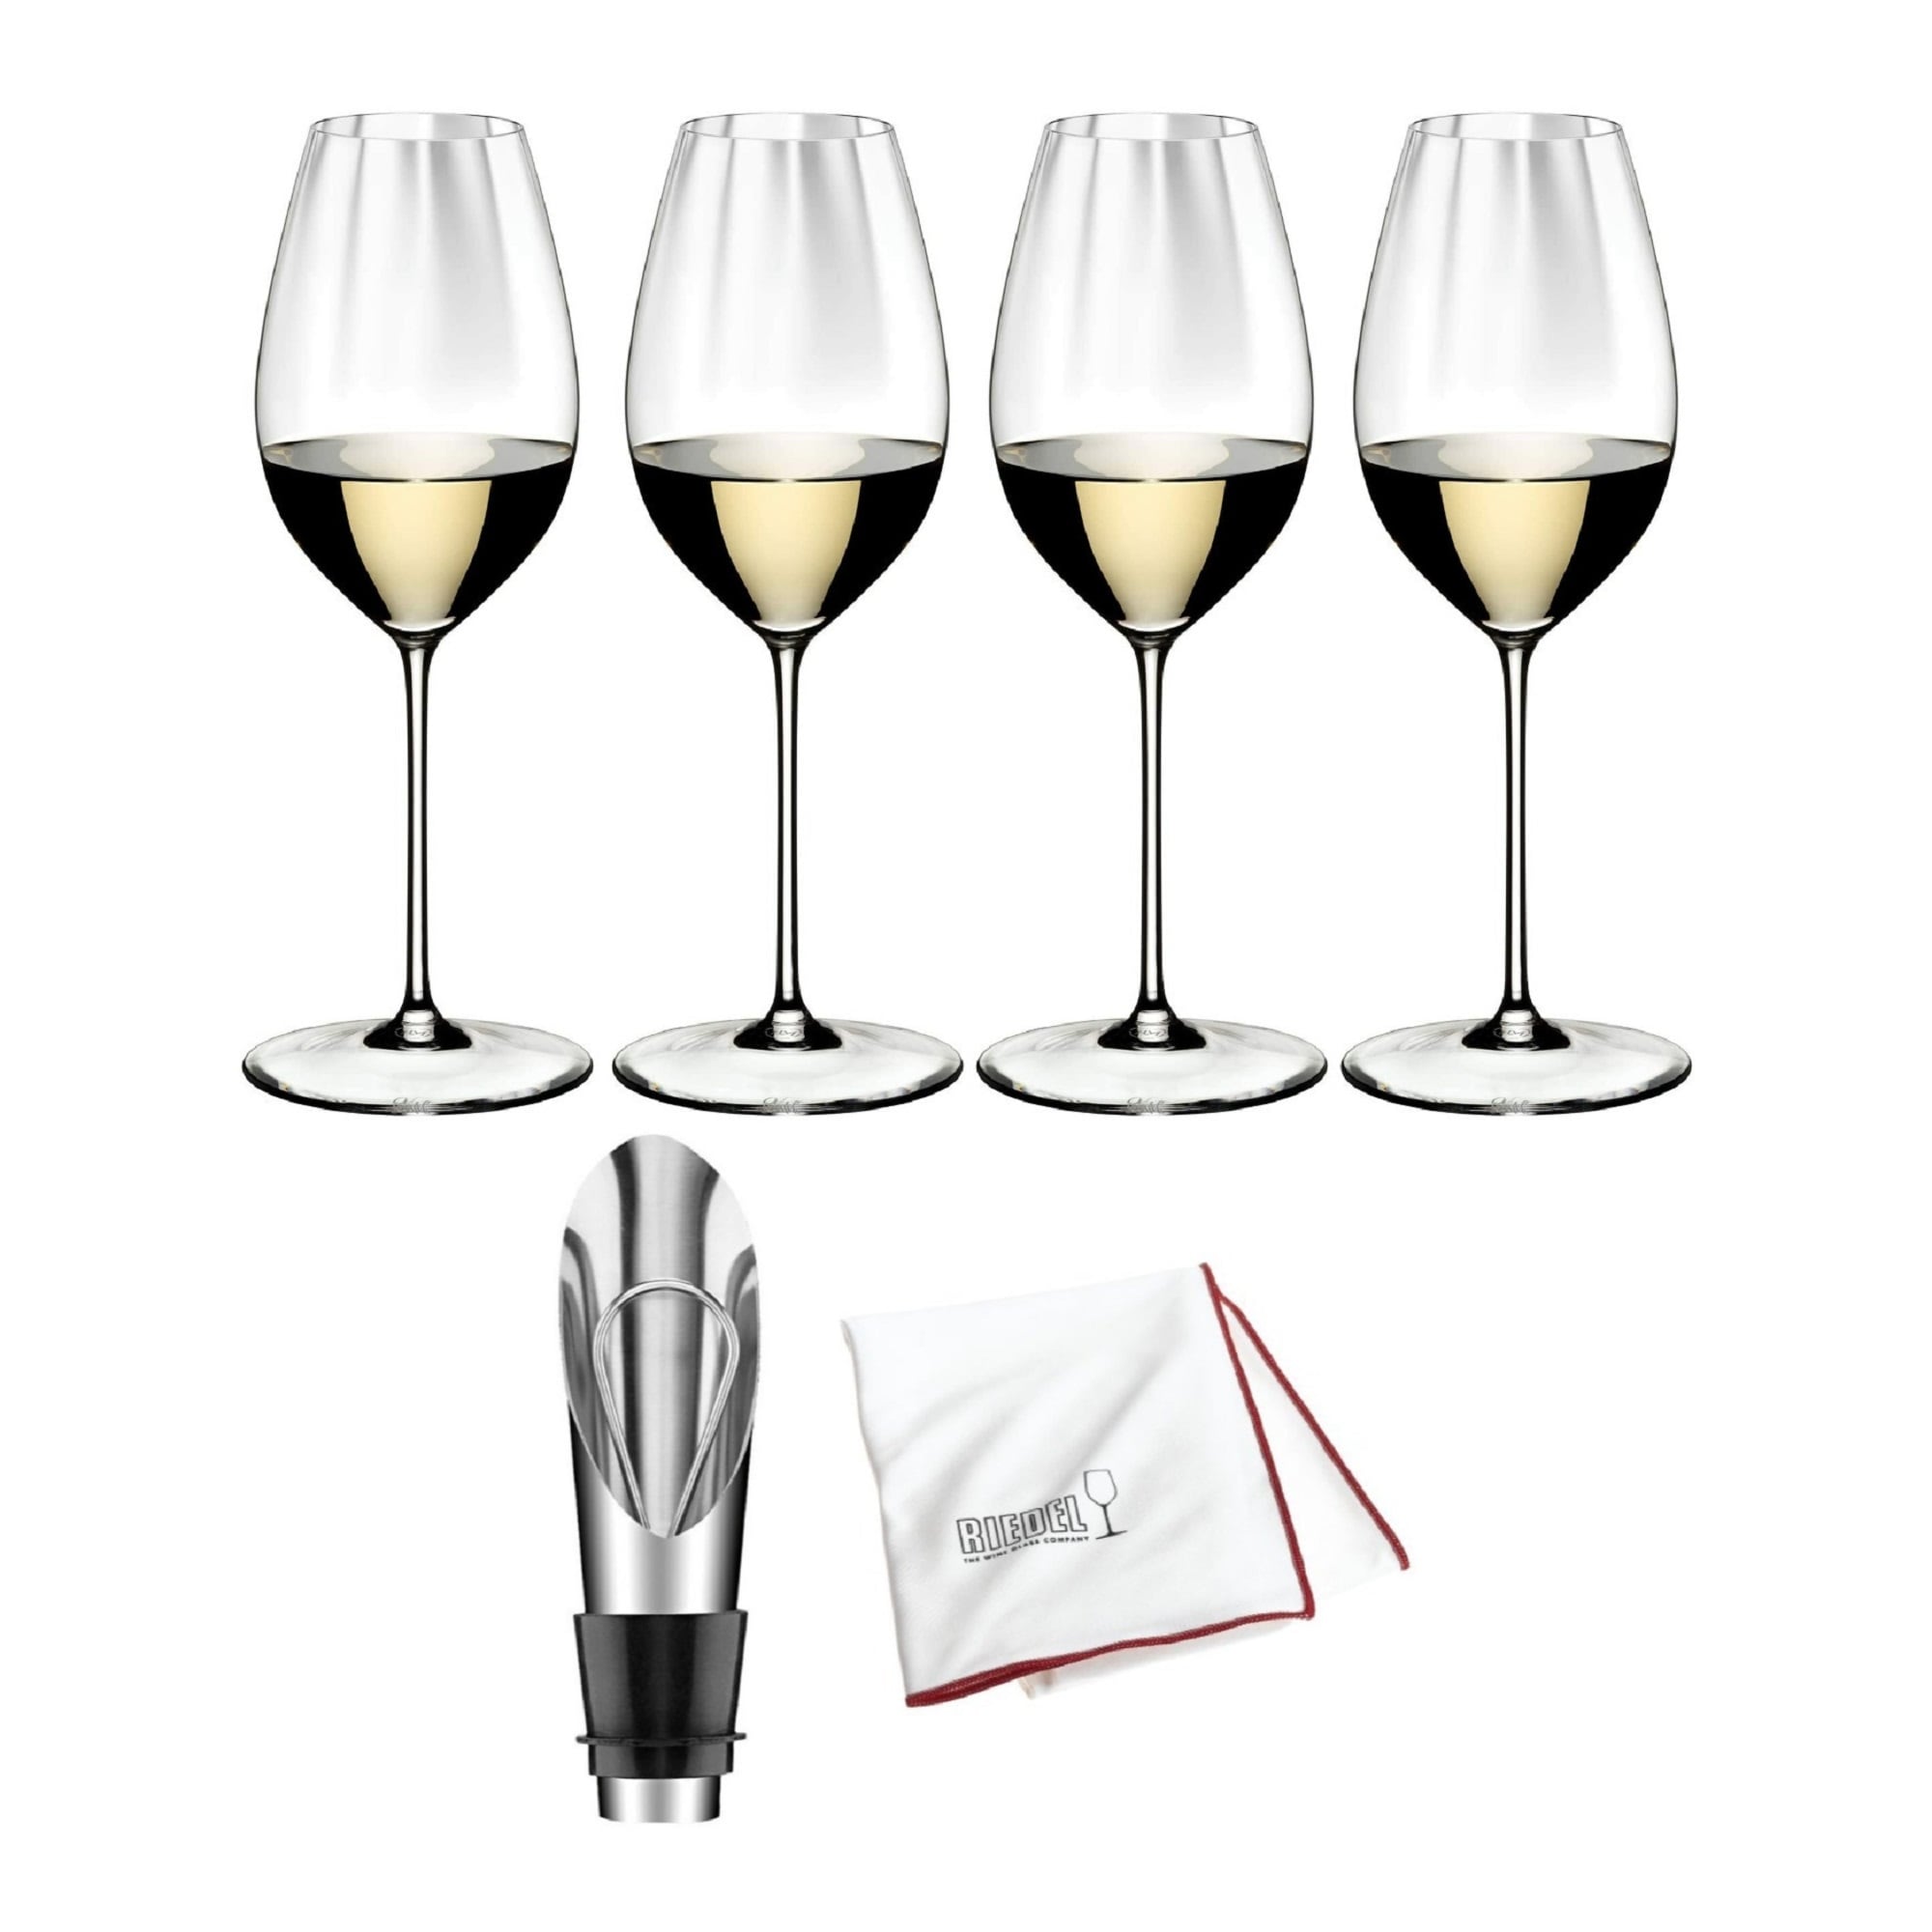 https://ak1.ostkcdn.com/images/products/is/images/direct/cd56456d0f3c15794bab6050c787159a88d78801/Riedel-Performance-Sauvignon-Blanc-Glass-%284Pk%29-with-Wine-Pourer-Bundle.jpg